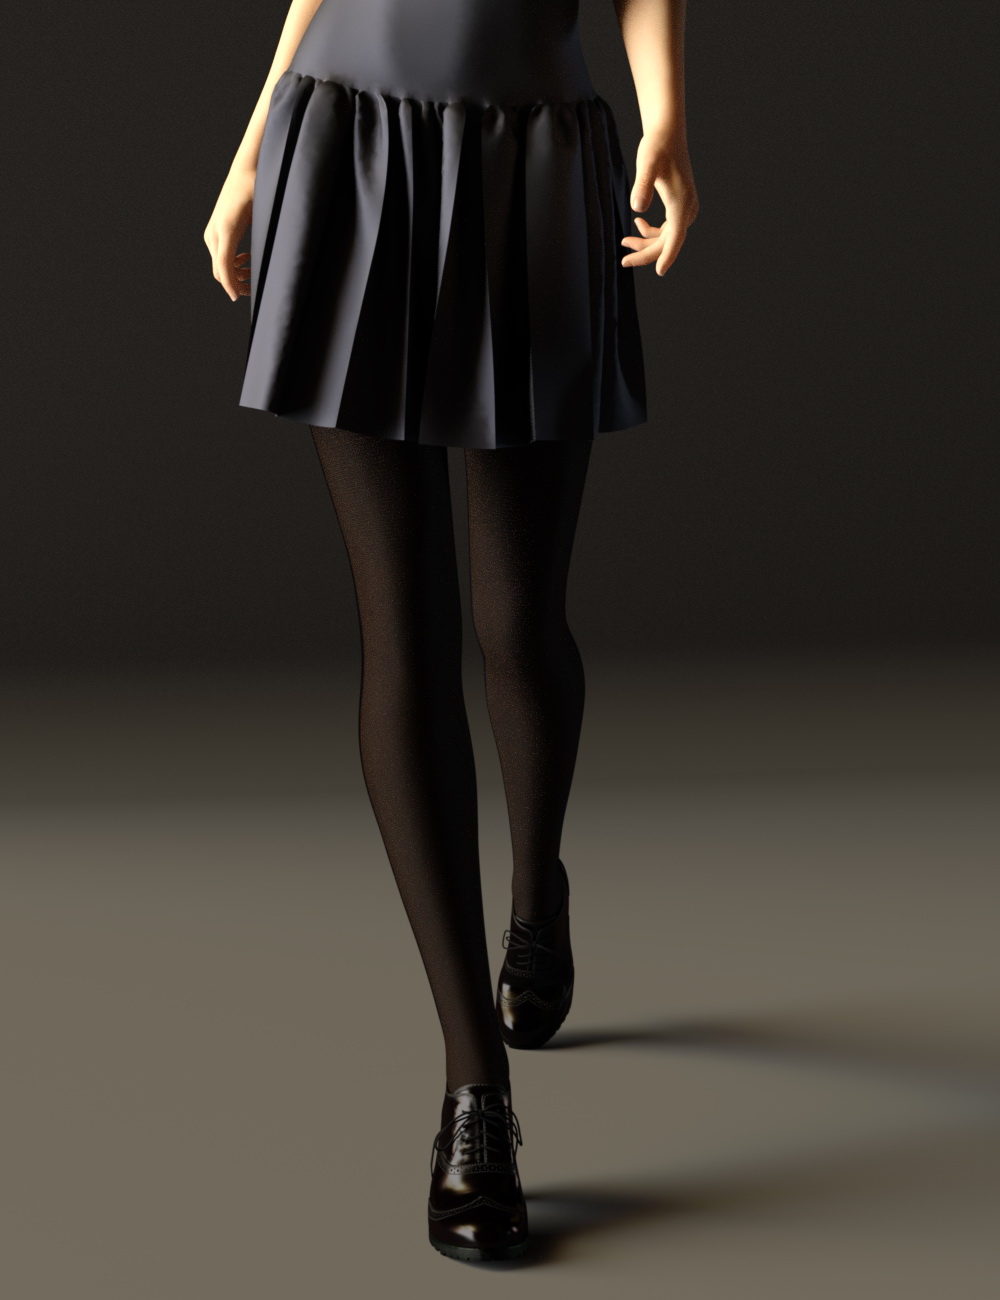 Angela Heel for Genesis 8 Female(s) by: chungdan, 3D Models by Daz 3D